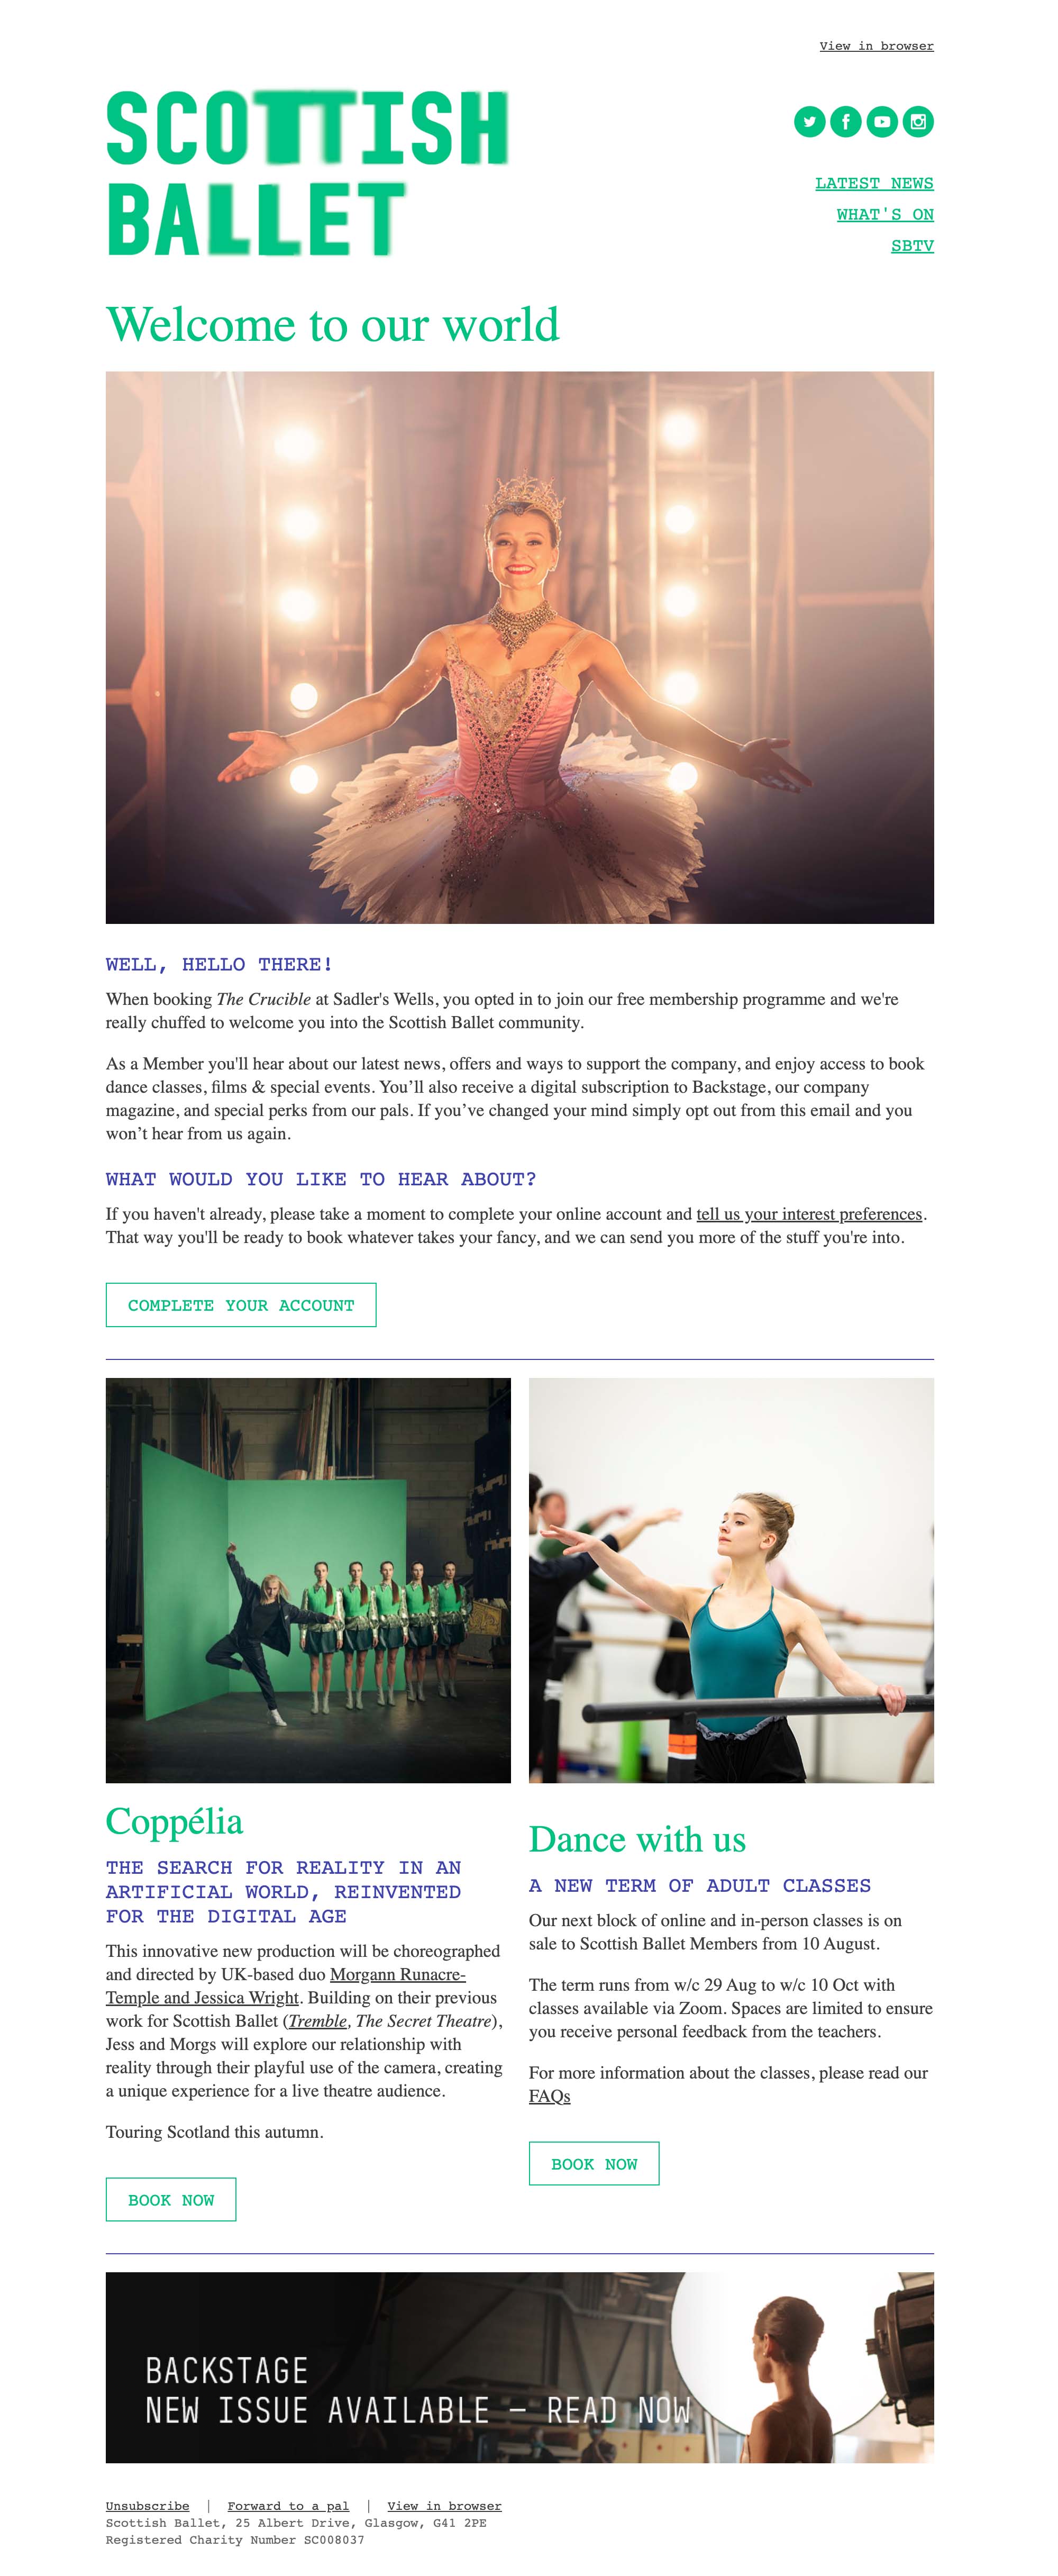 ✨ FirstName, welcome to Scottish Ballet - desktop view